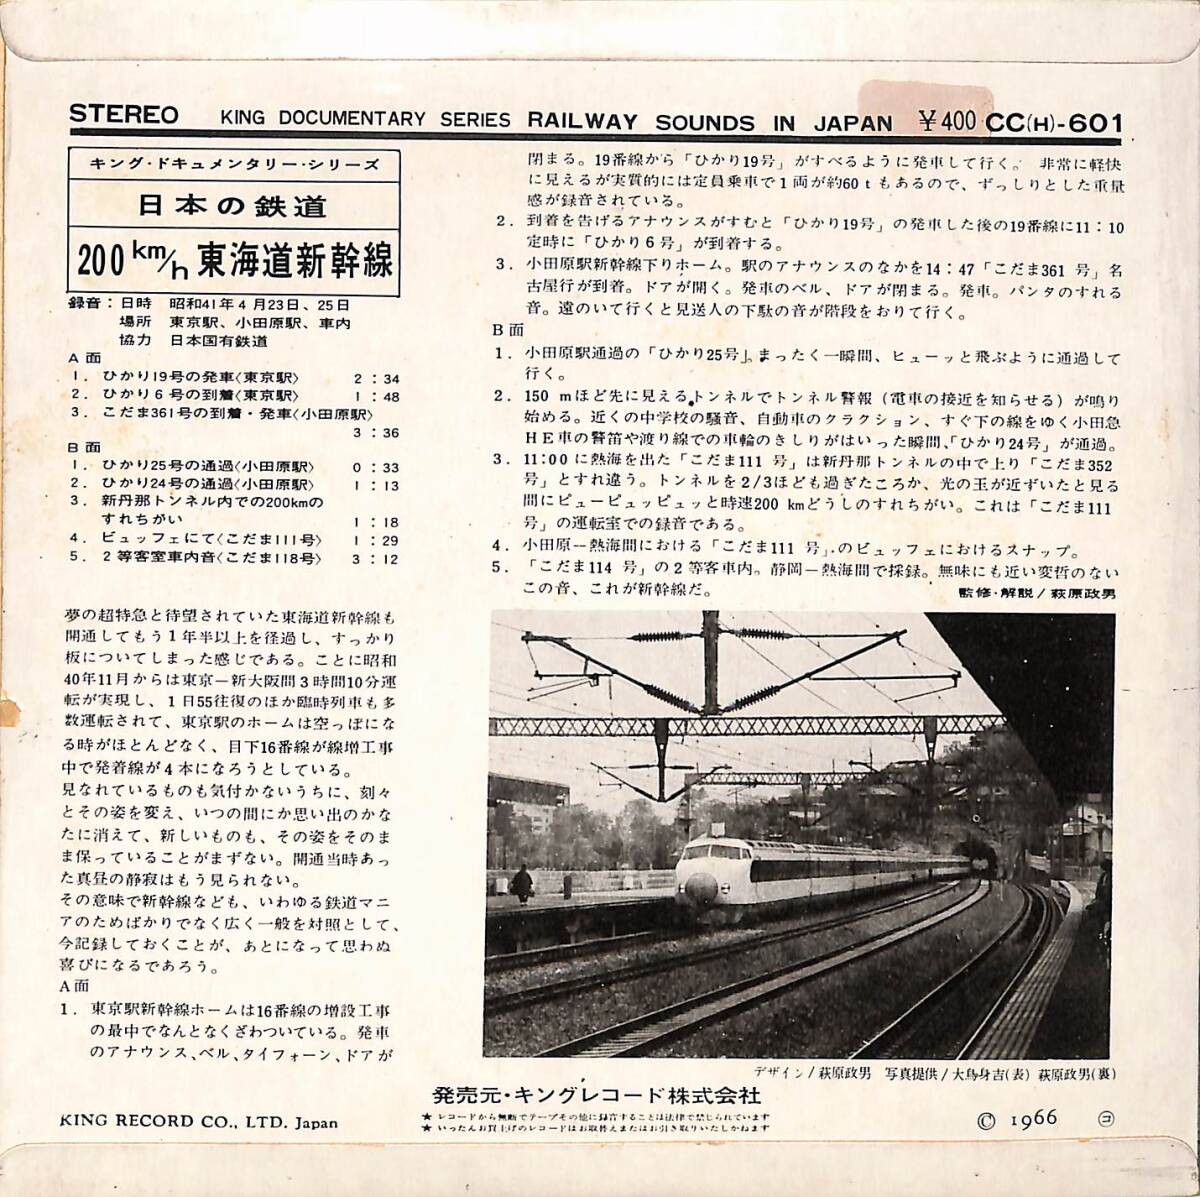 C00202396/EP1枚組-33RPM/萩原政男(監修・解説)「日本の鉄道 200km/h 東海道新幹線 (1966年・CC-601・フィールドレコーディング)」_画像2